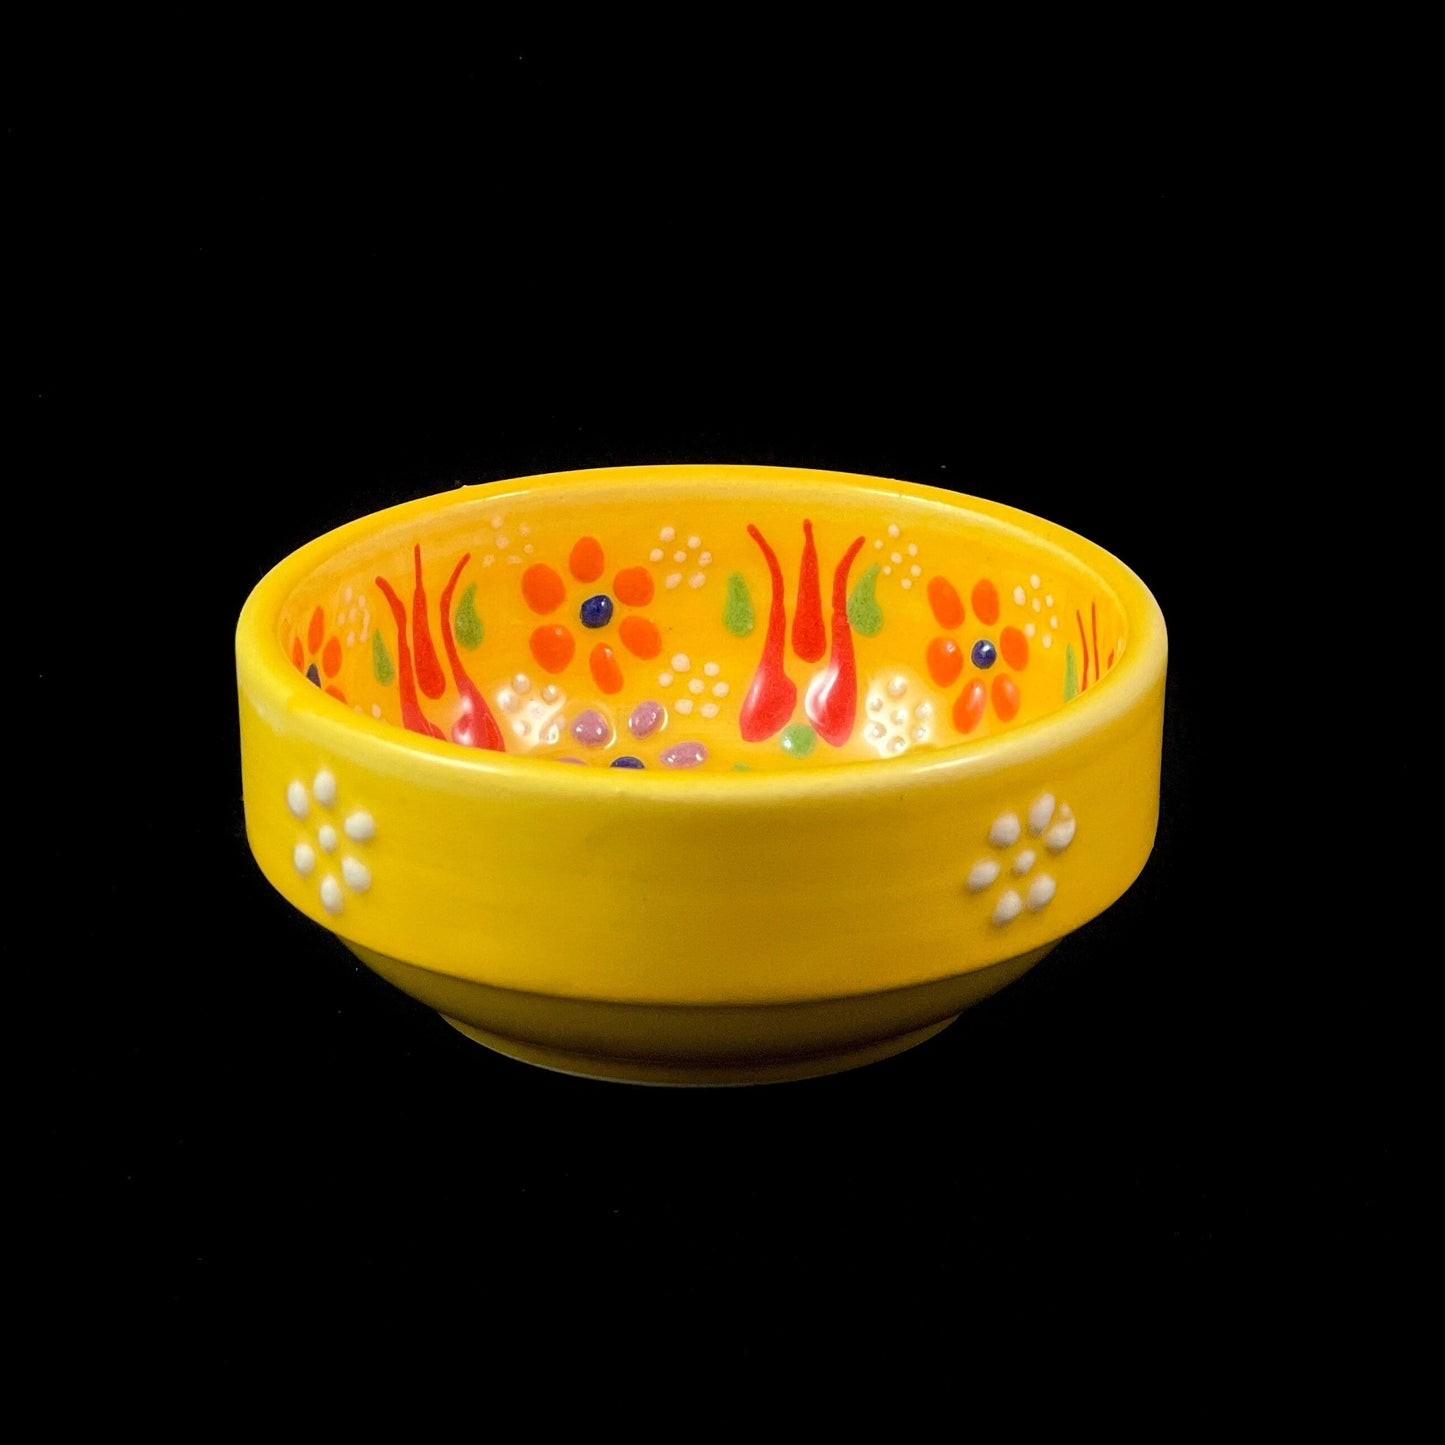 Handmade Sugar Bowl, Functional and Decorative Turkish Pottery, Cottagecore Style, Yellow